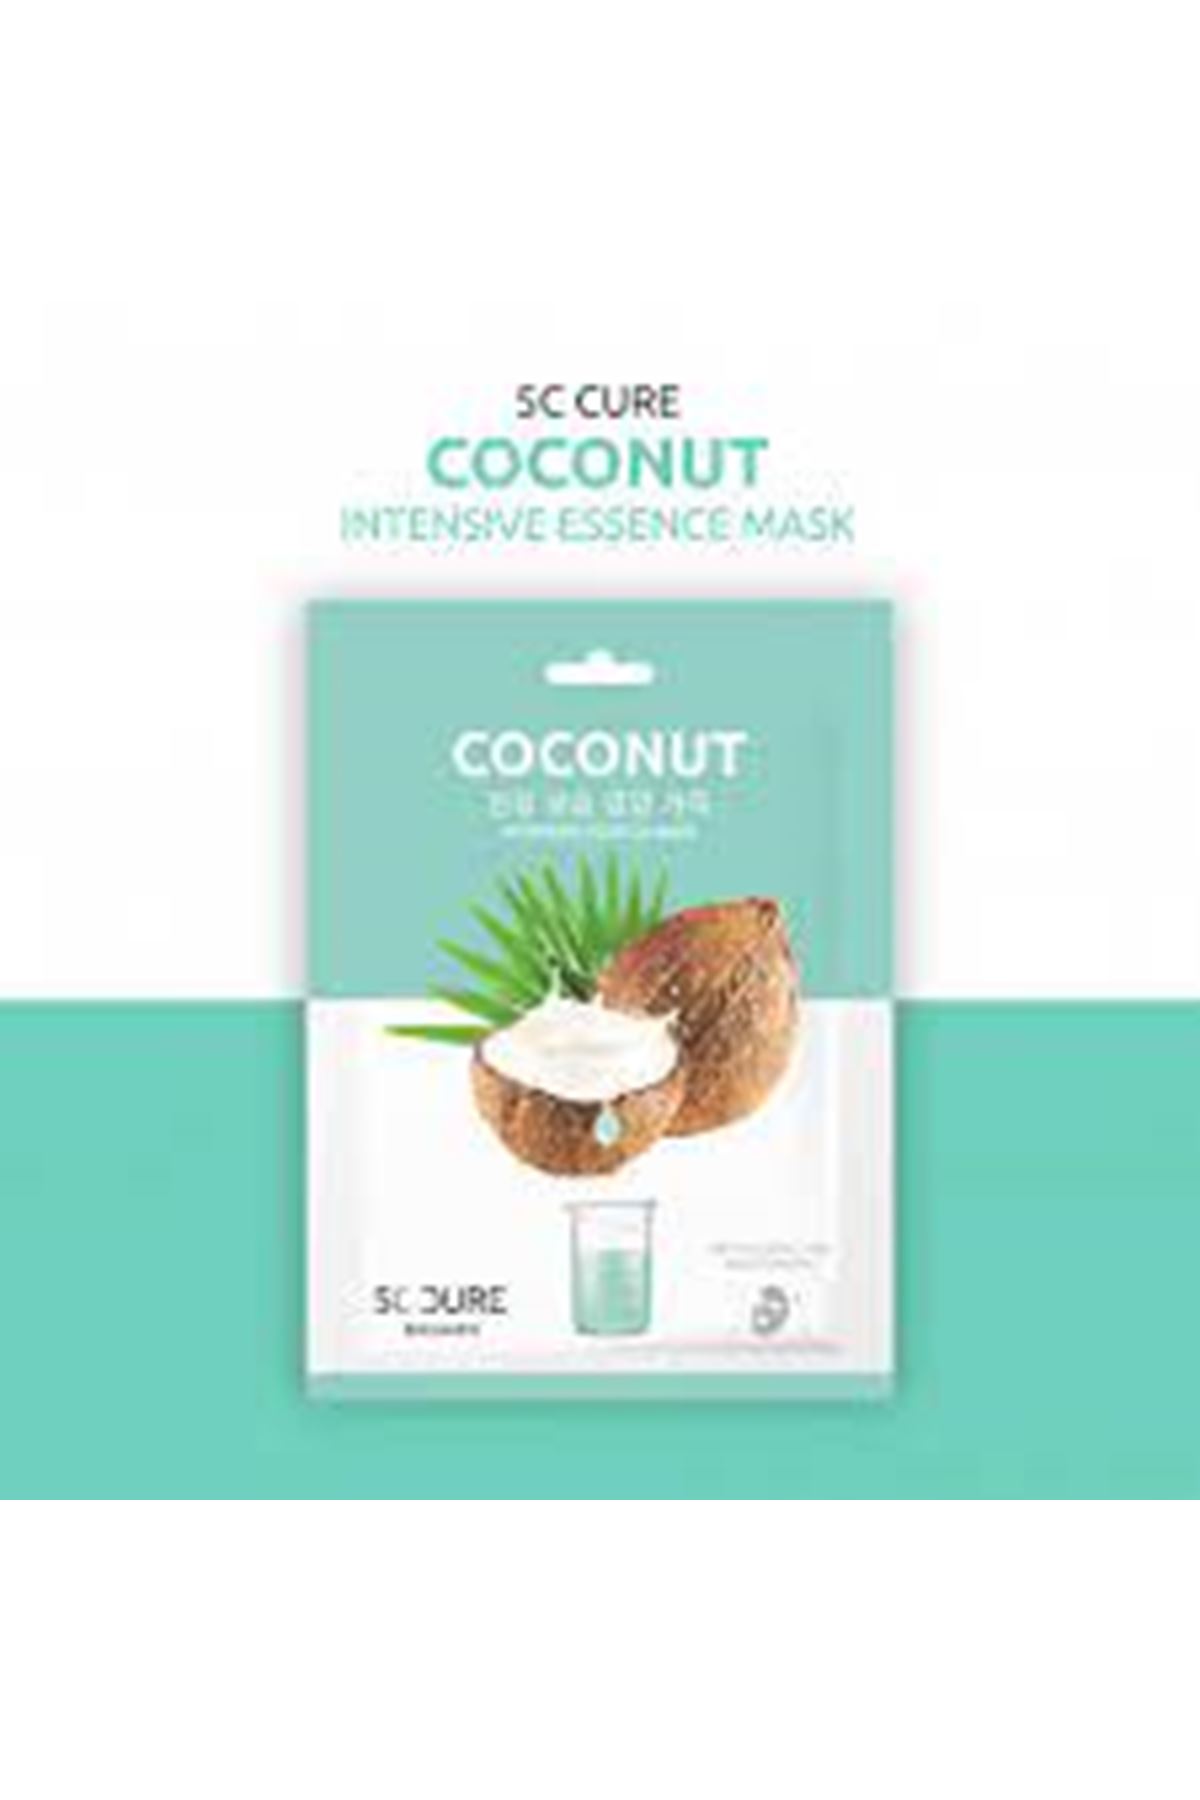 5c Cure Coconut Intensive Essence Mask